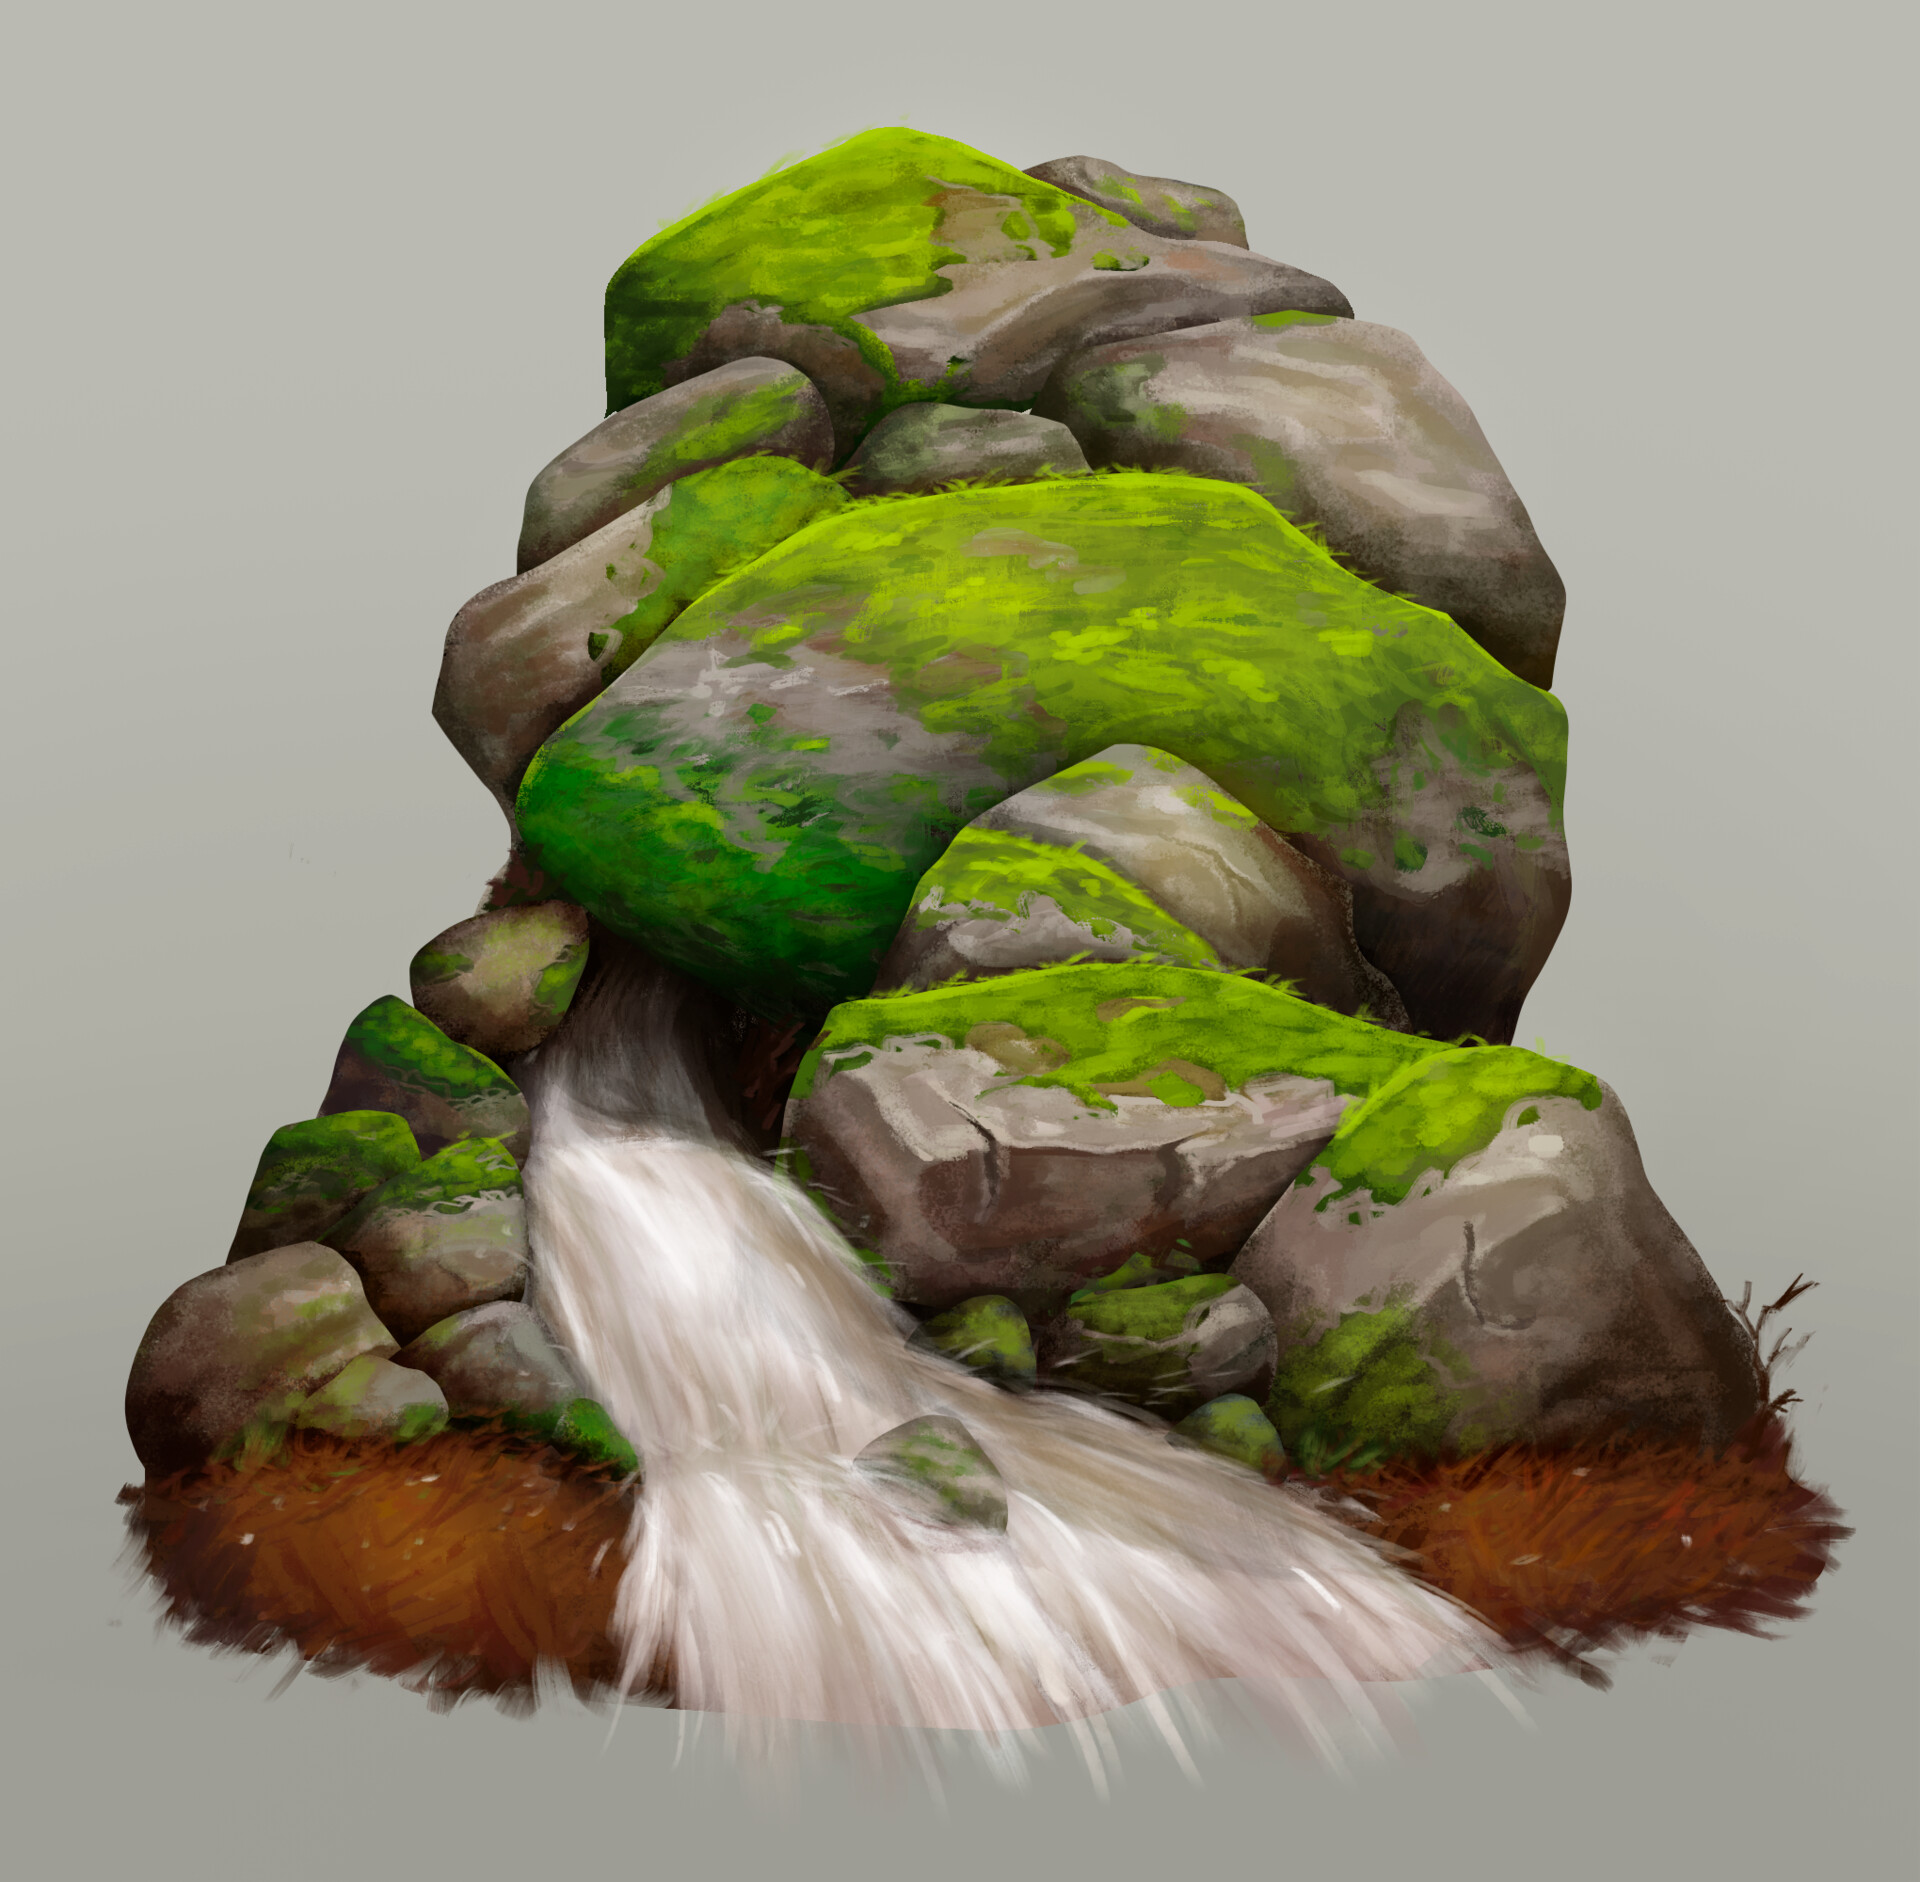 ArtStation - Moss Rocks Study